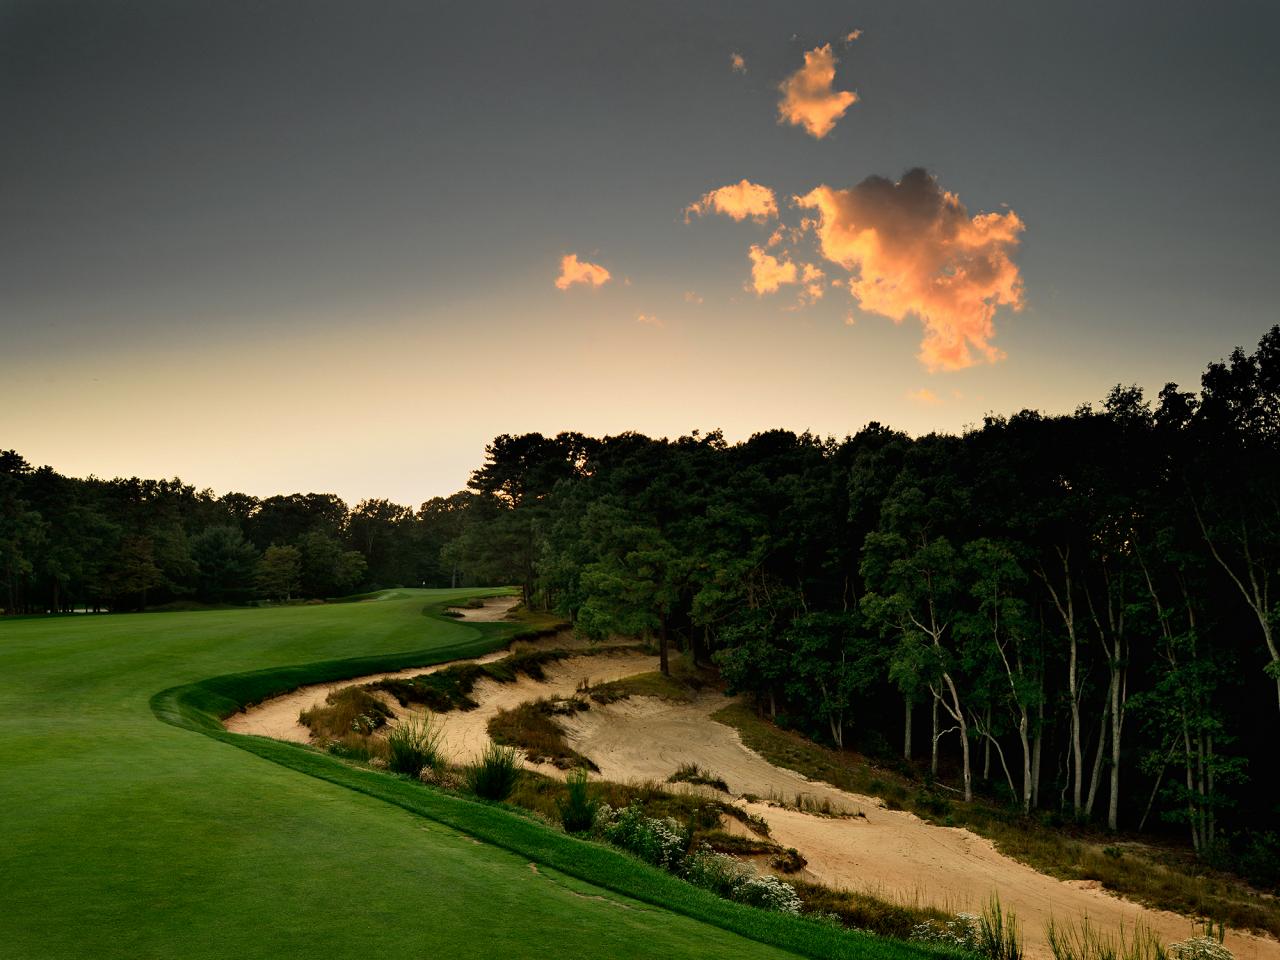 Pine Valley Golf Club Course Review & Photos | Courses ...